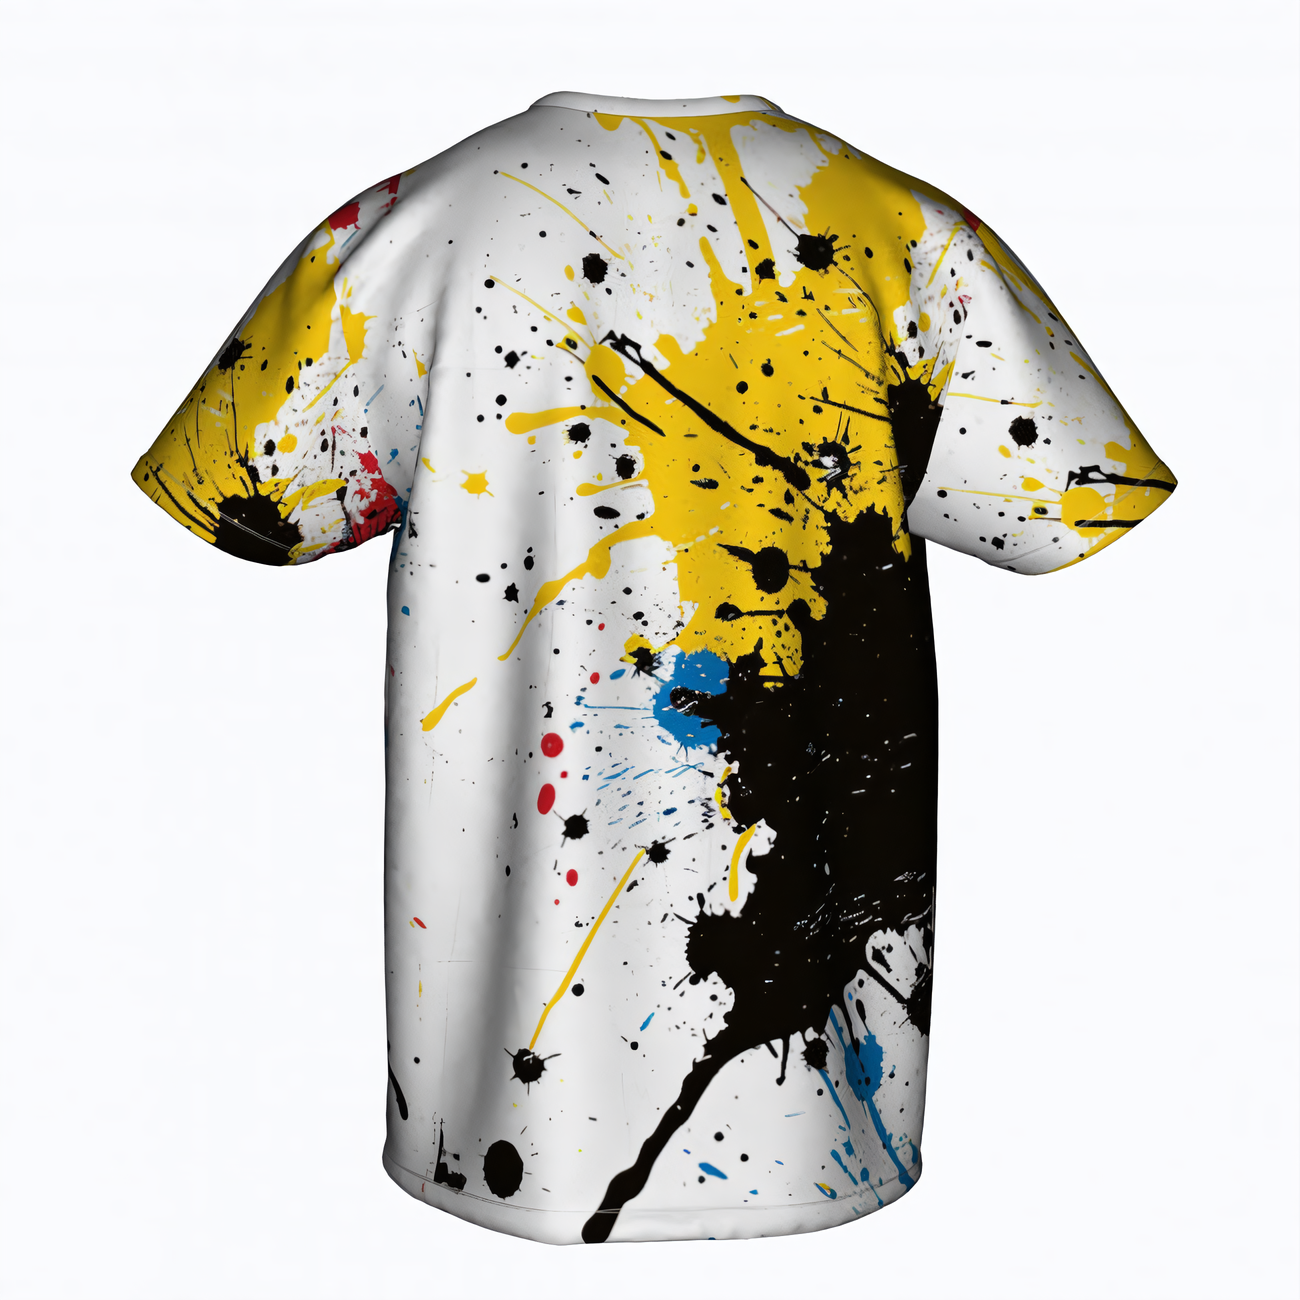 Chroma Splash Full Print Men's T-Shirt - Cotton